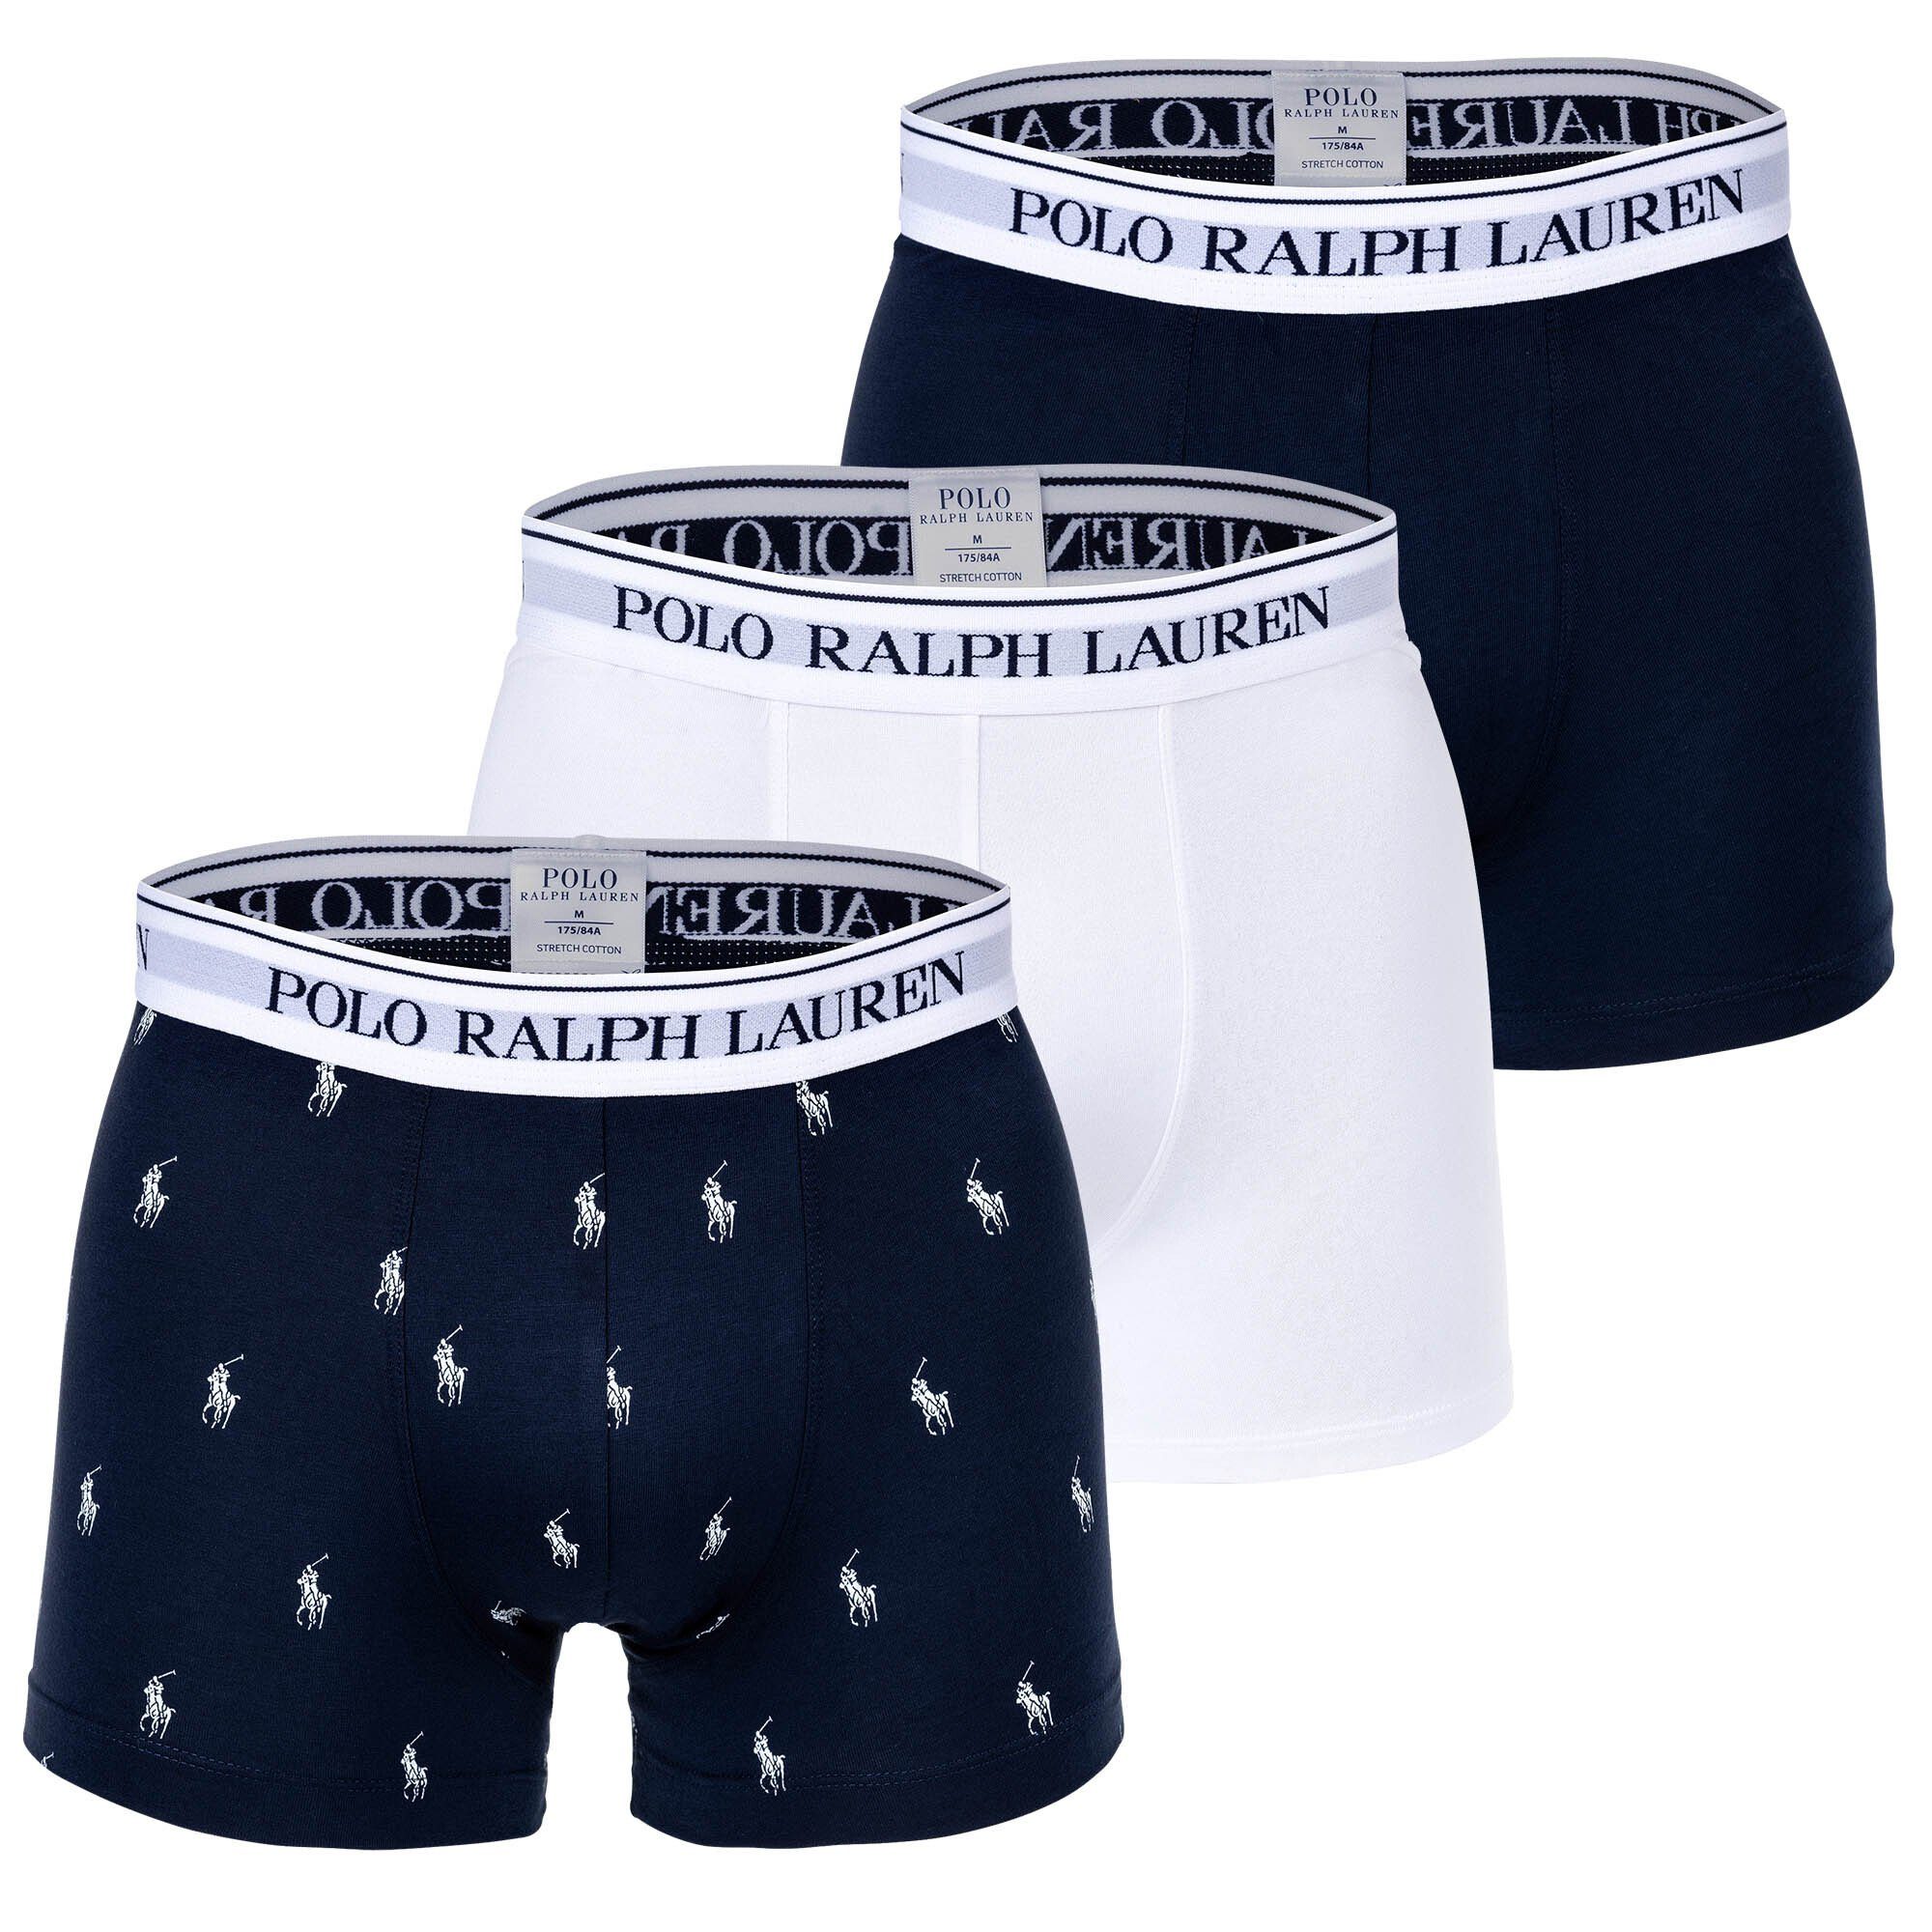 Polo Ralph Lauren Boxer Herren CLSSIC - TRUNK-3 Shorts, Pack Dunkelblau/Weiß Boxer 3er